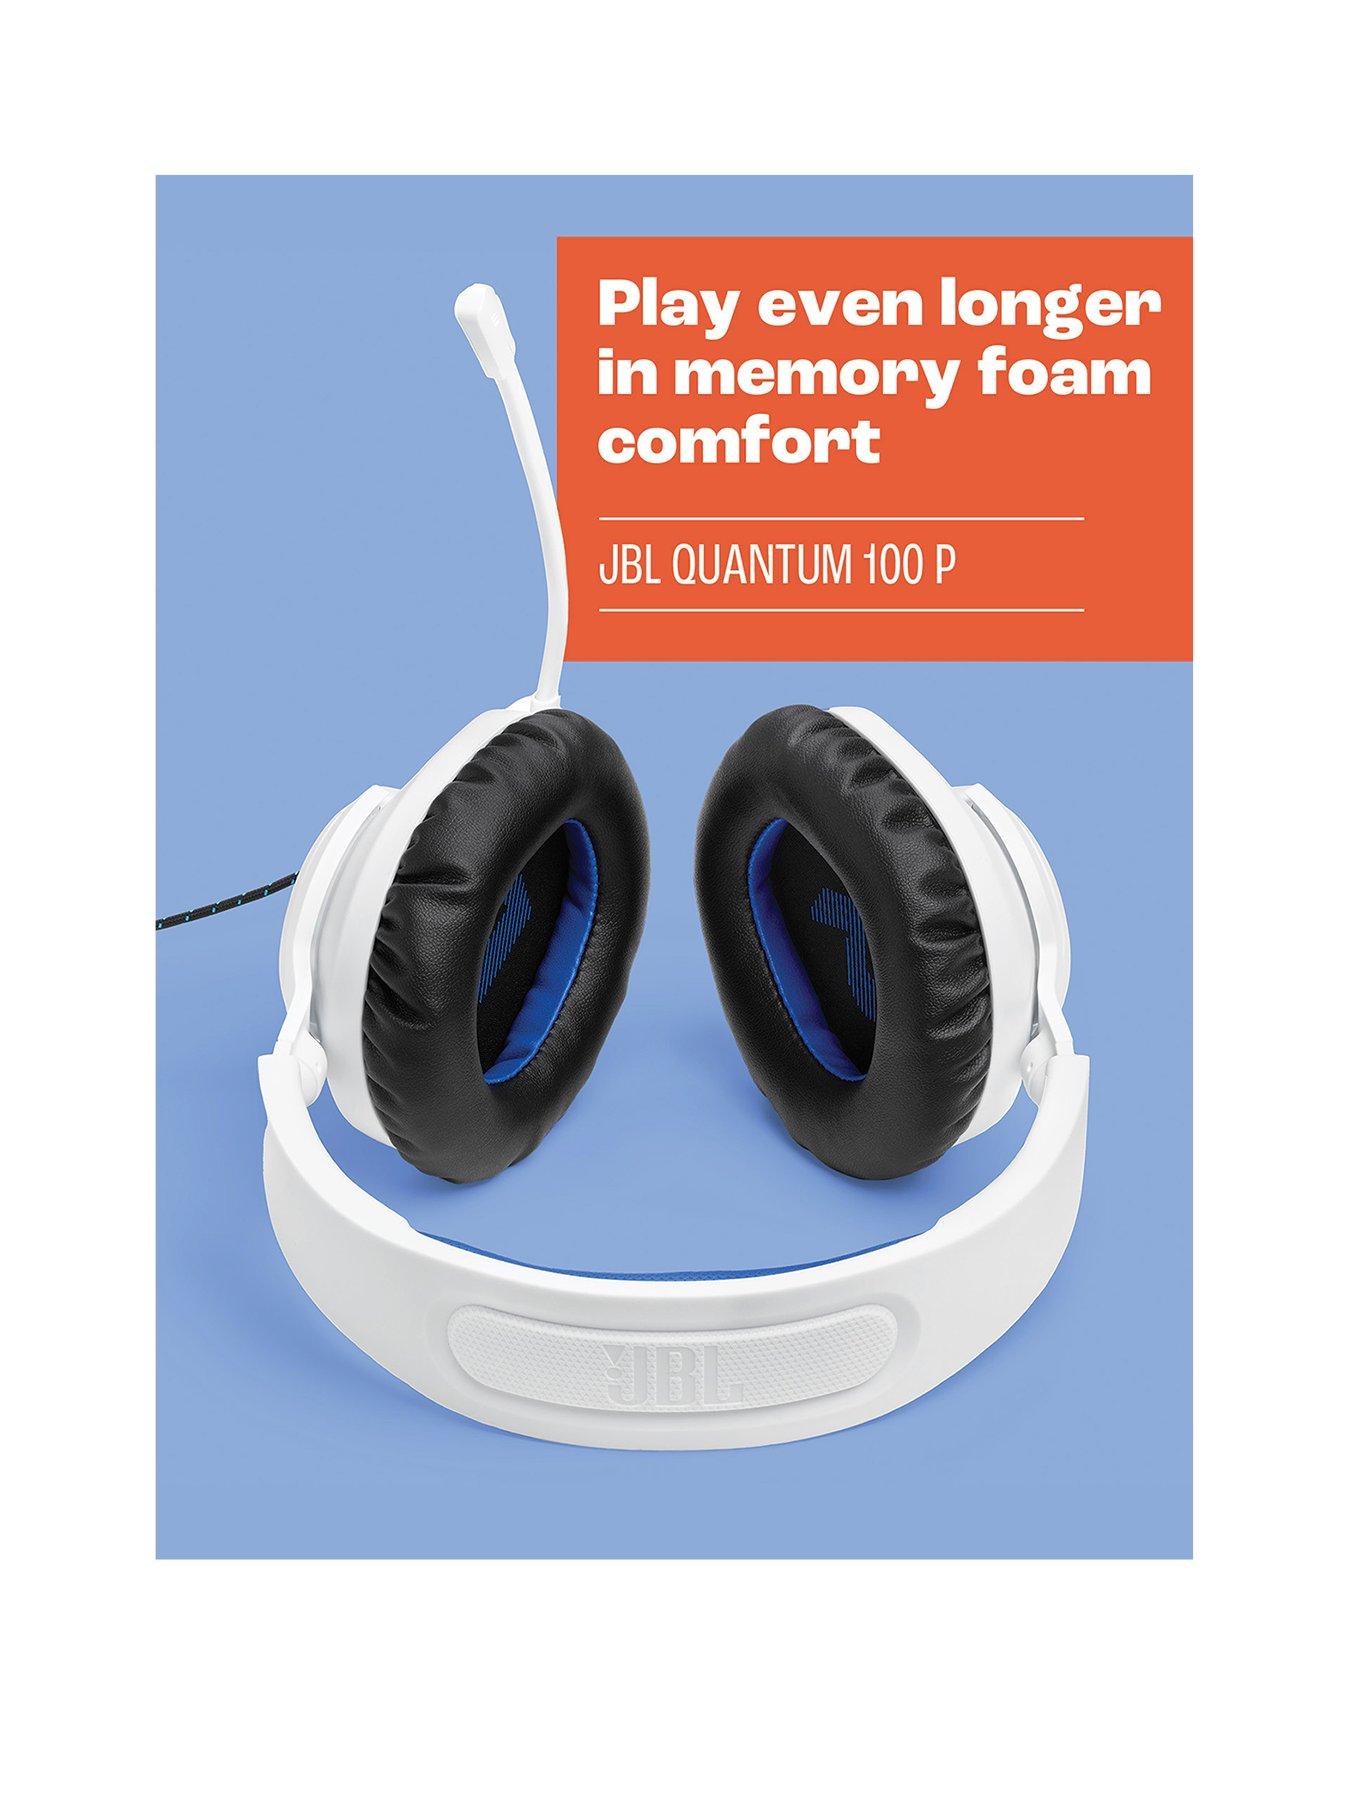  JBL Quantum 100 - Wired Over-Ear Gaming Headphones - Black,  Large : Video Games